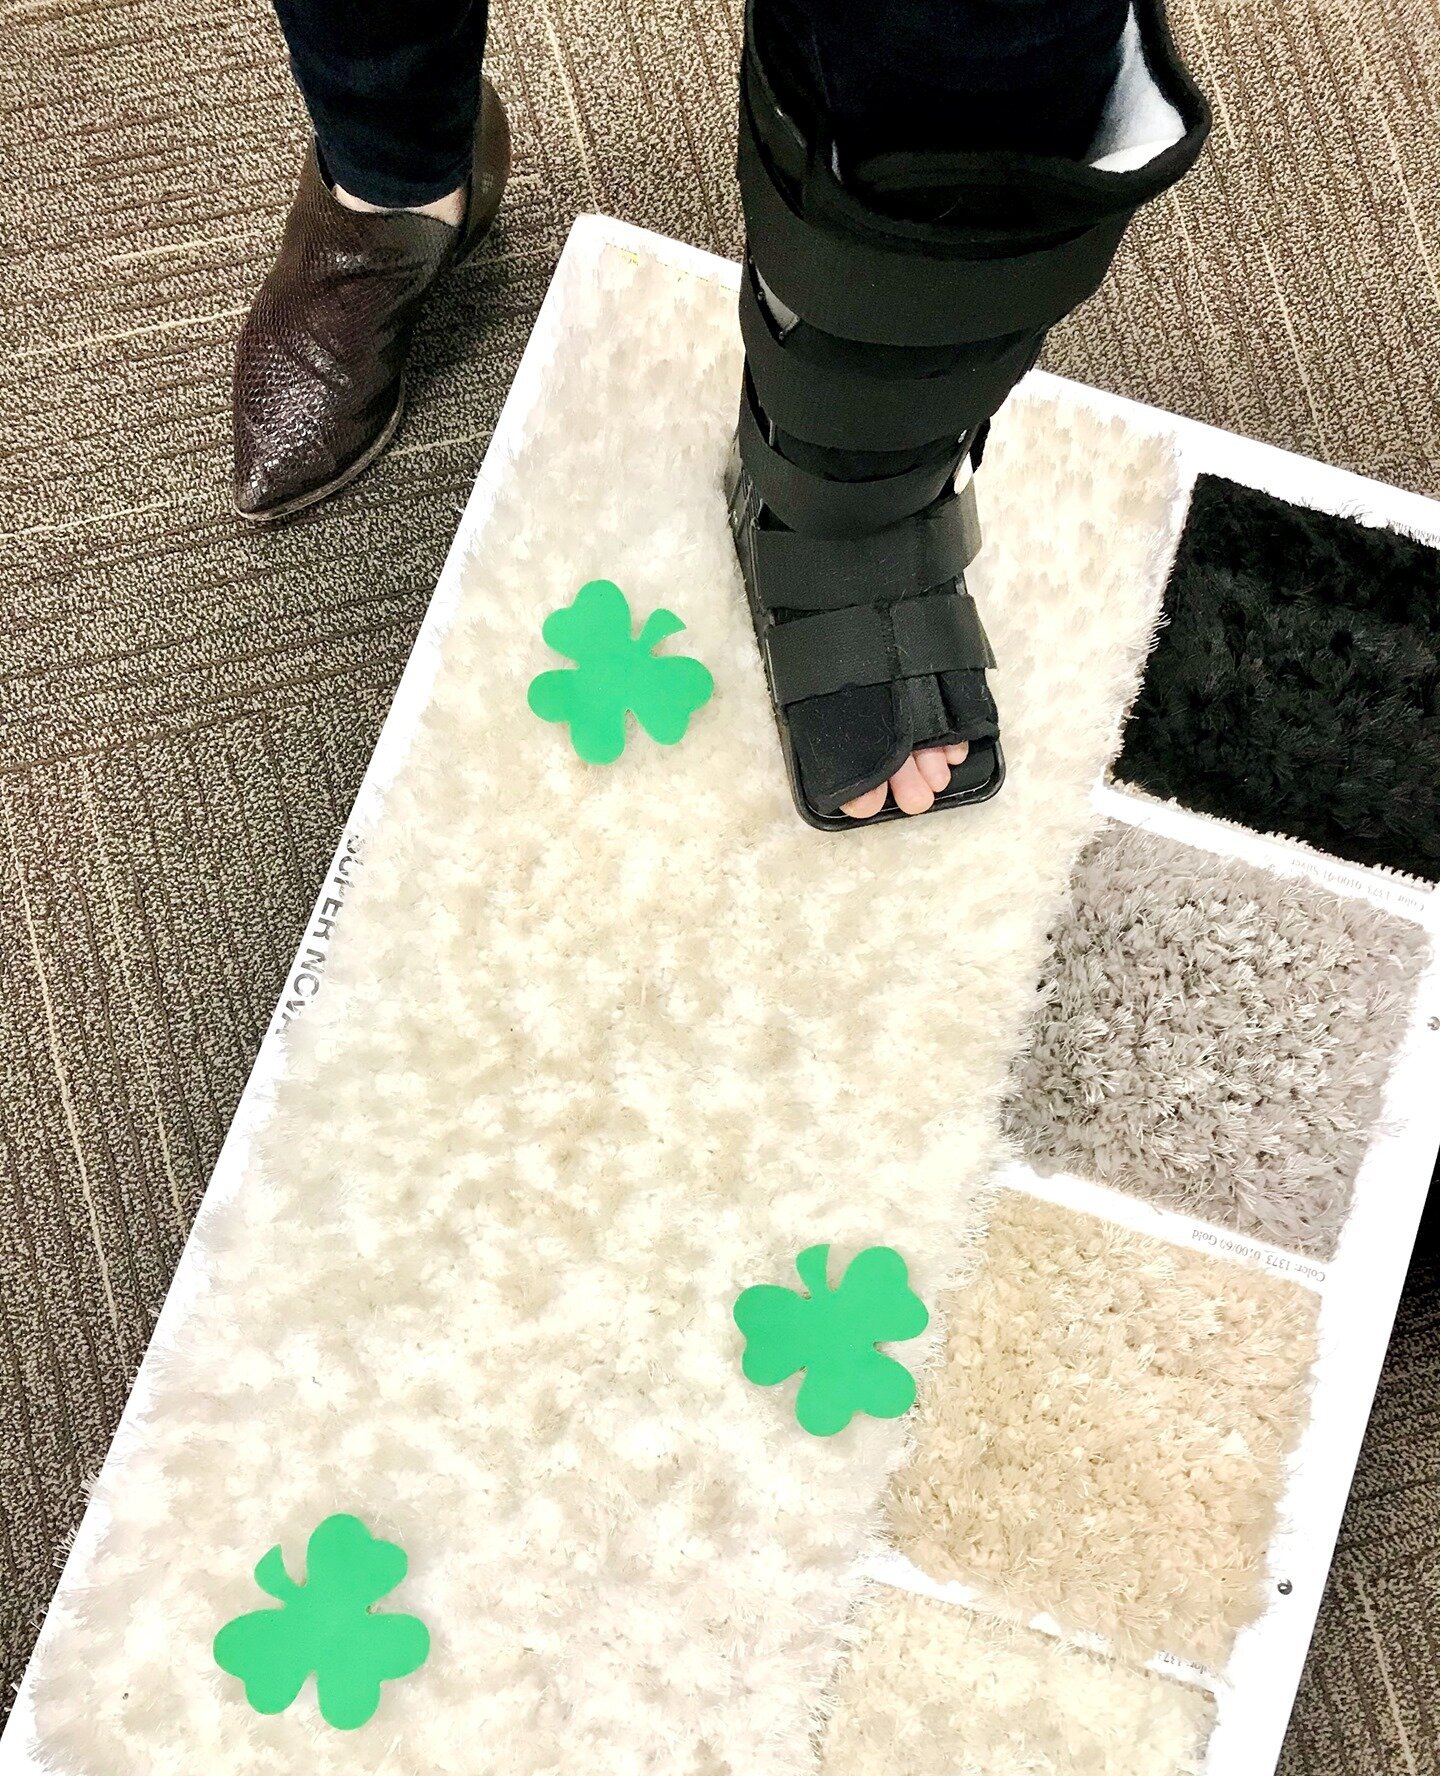 I'm not walking in a field of clover, but this carpet is so soft I'm okay with that. #stpatricksdaydecor 😉🍀⁠
⁠
⁠
⁠
⁠
⁠
#stpatricksday #shagcarpet #adayinthelife #bclarkinteriordesign #interiordesigner #happyhome #peacefuldesign #designdetails #port